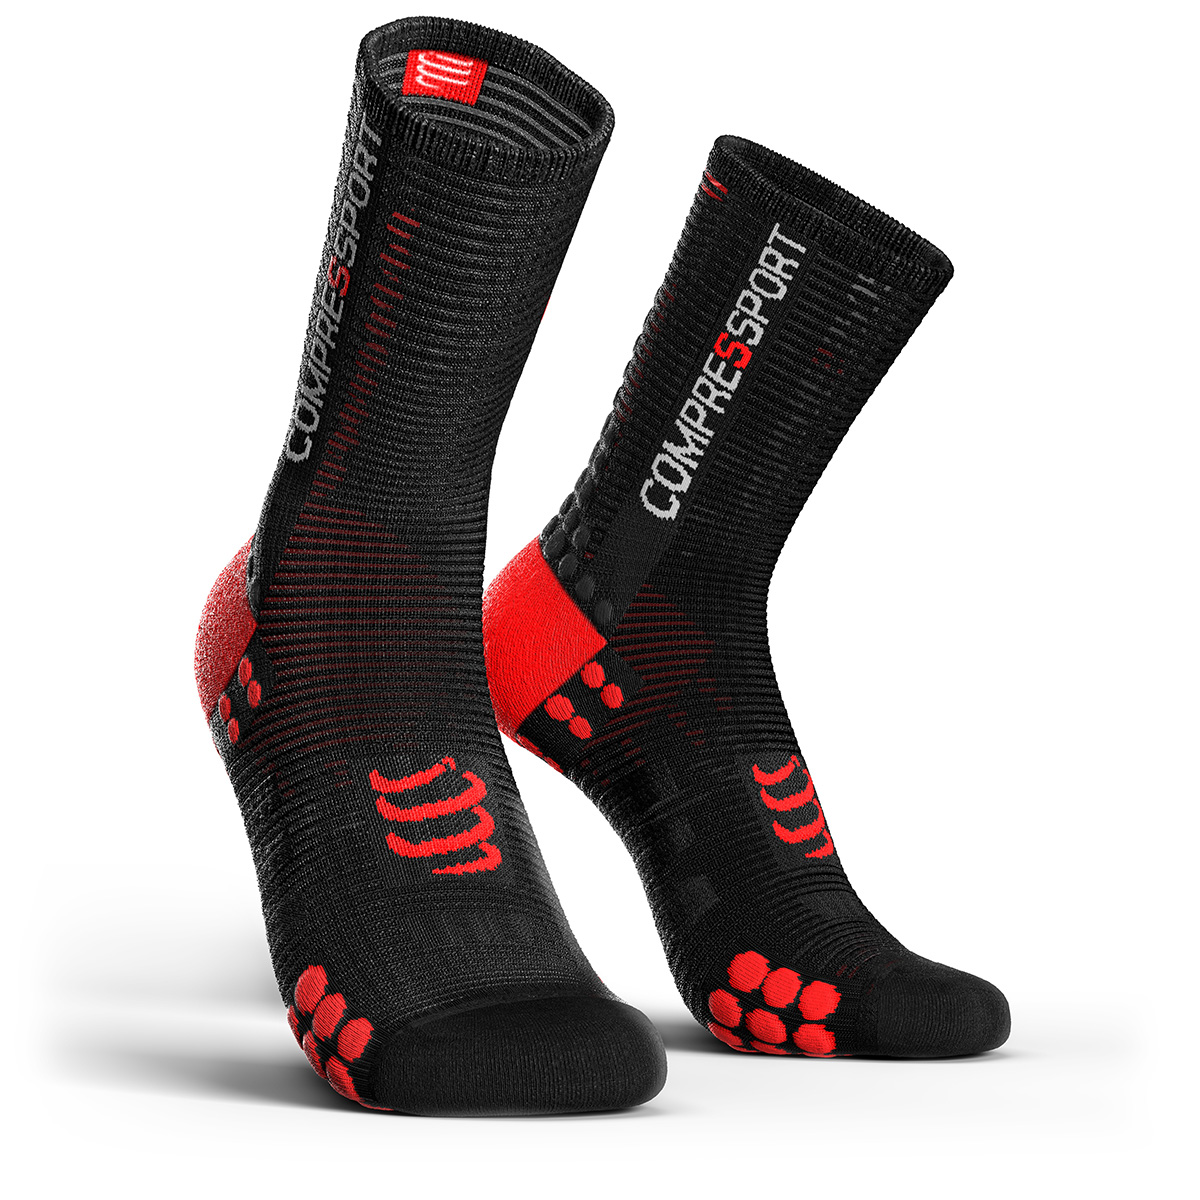 Image Pro Racing socks